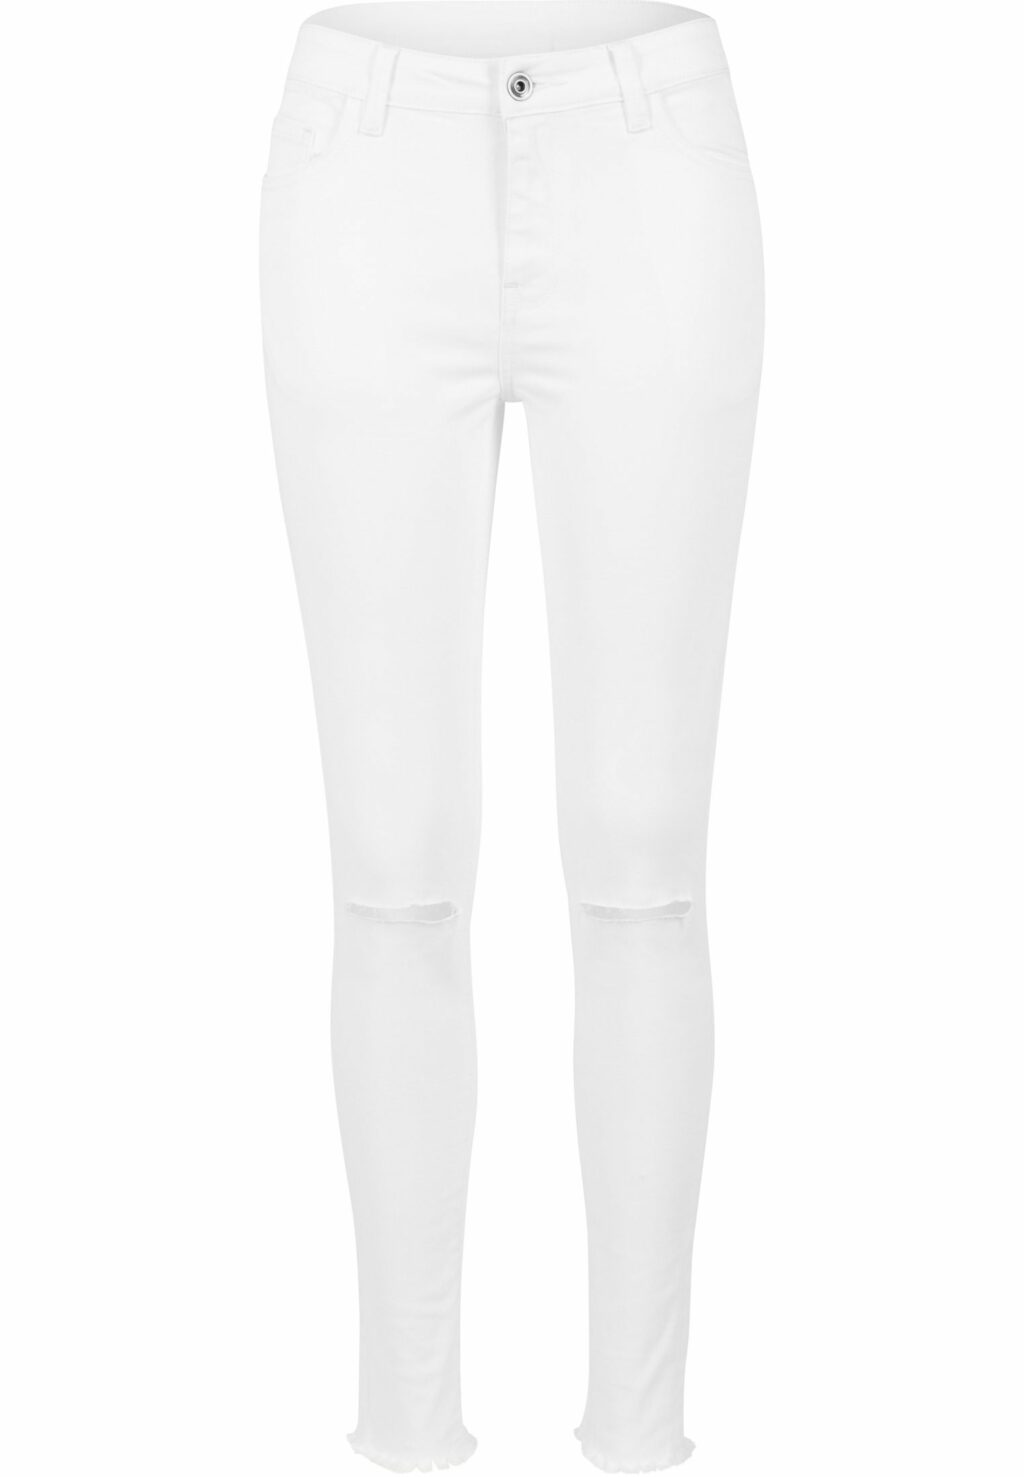 Urban Classics Ladies Cut Knee Pants white TB1538